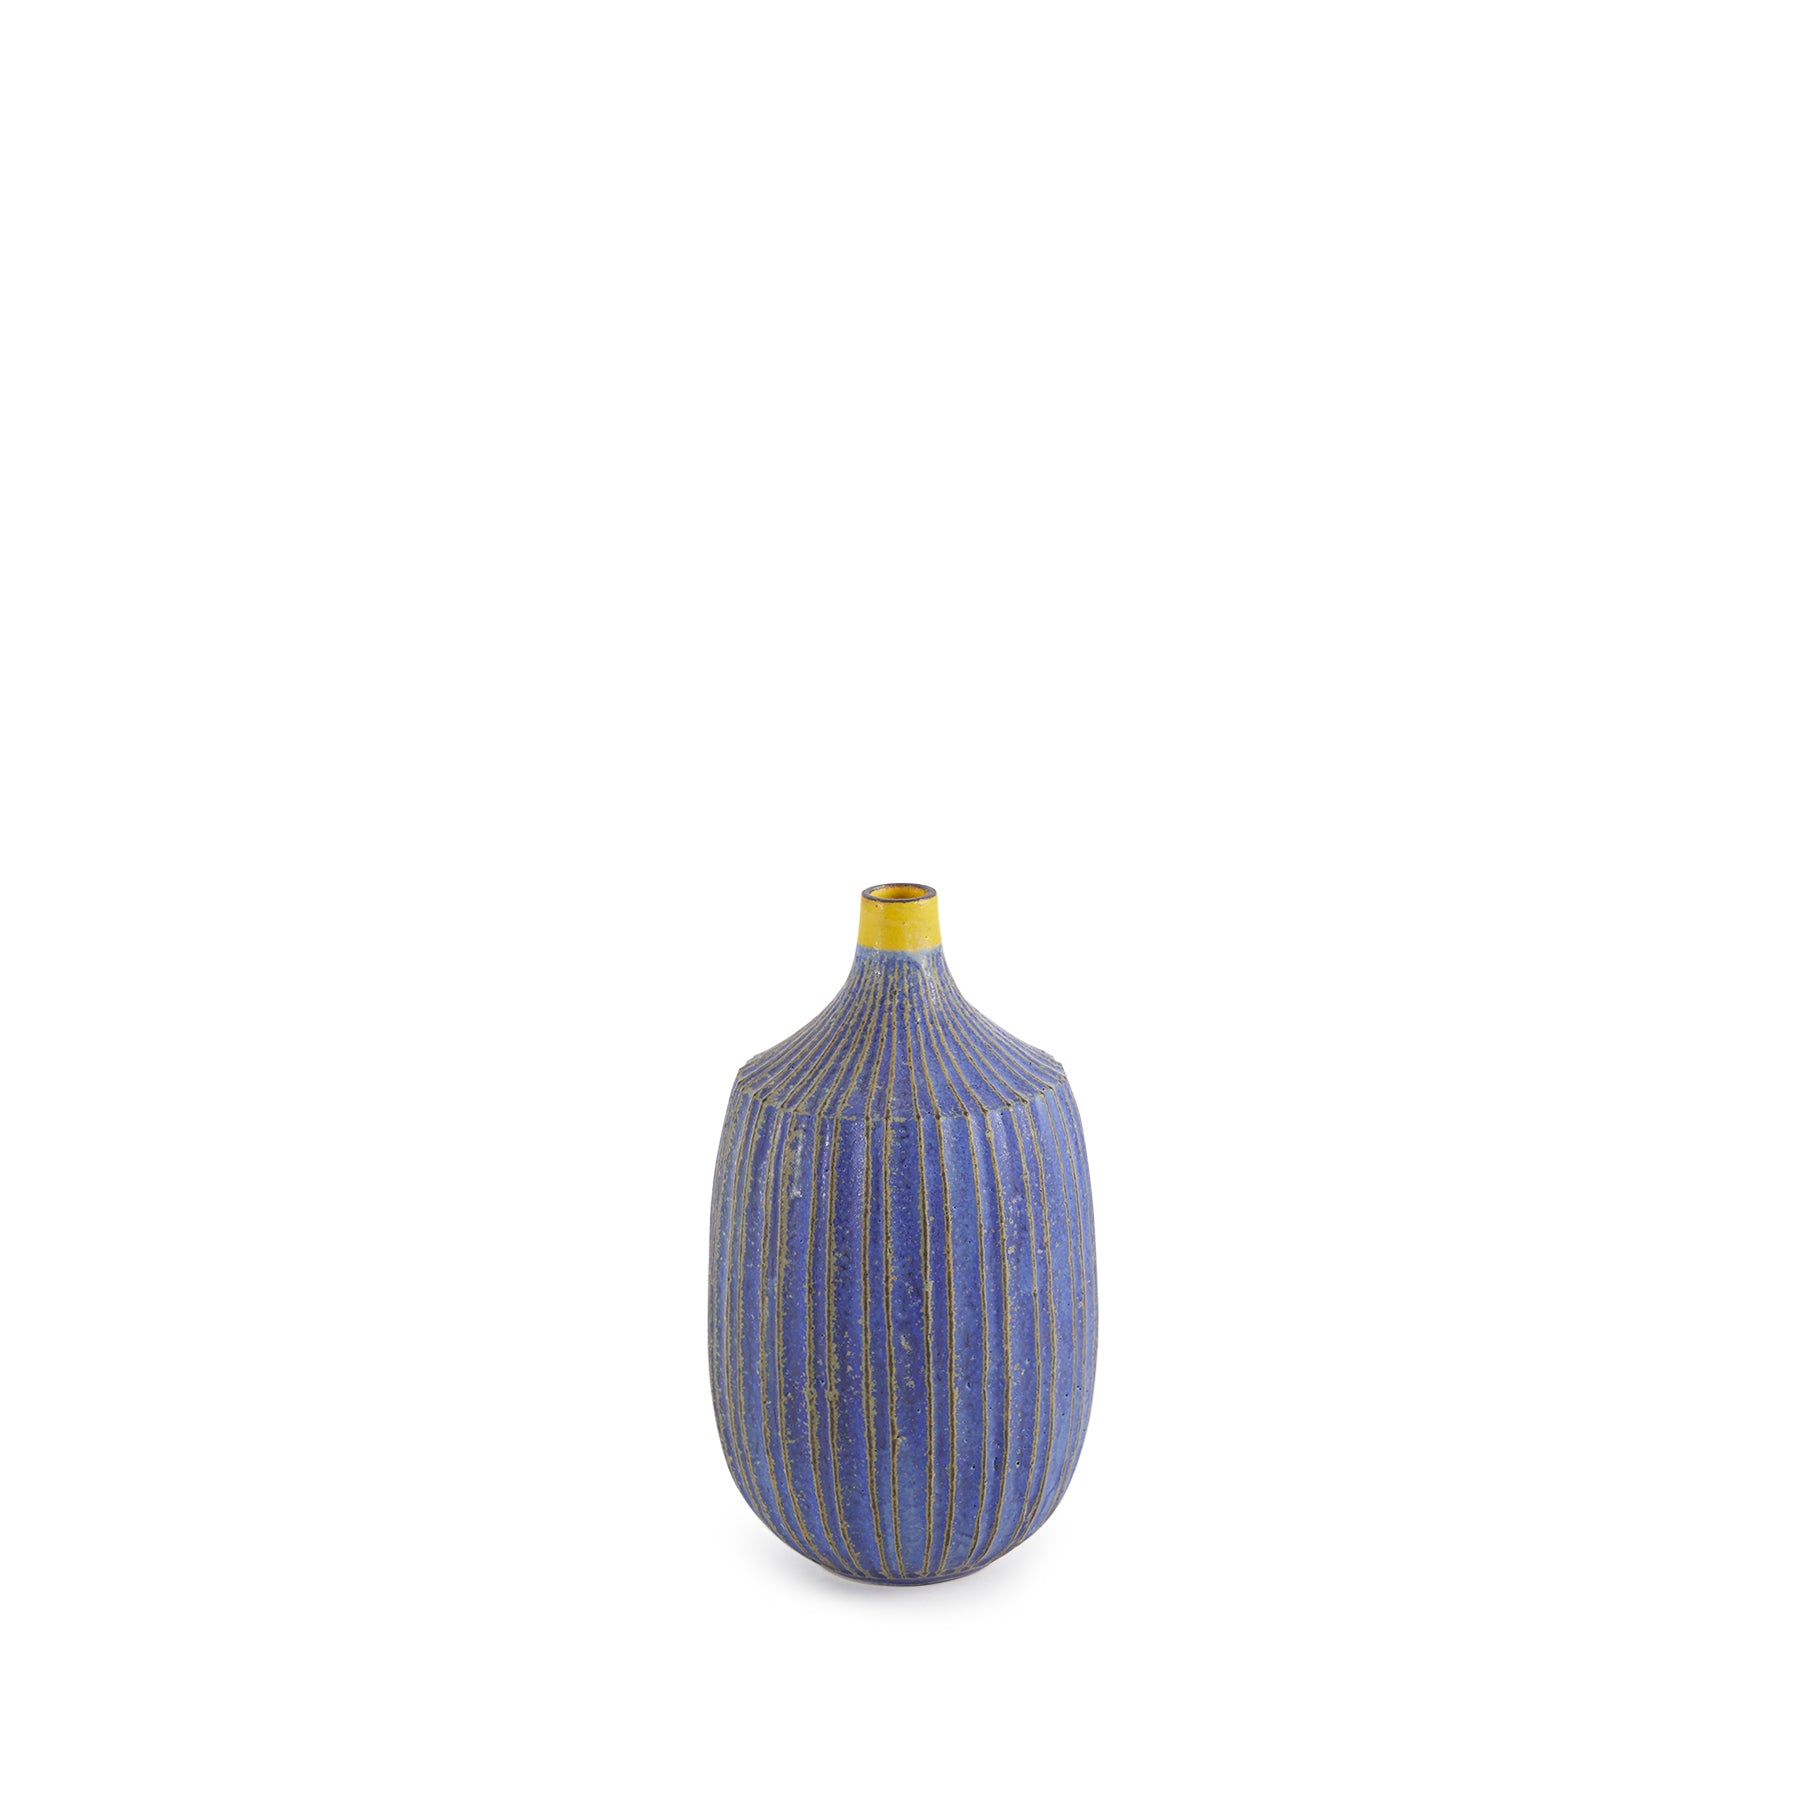 #12 Medium Vase in Indigo with Yellow Ring Zoom Image 1